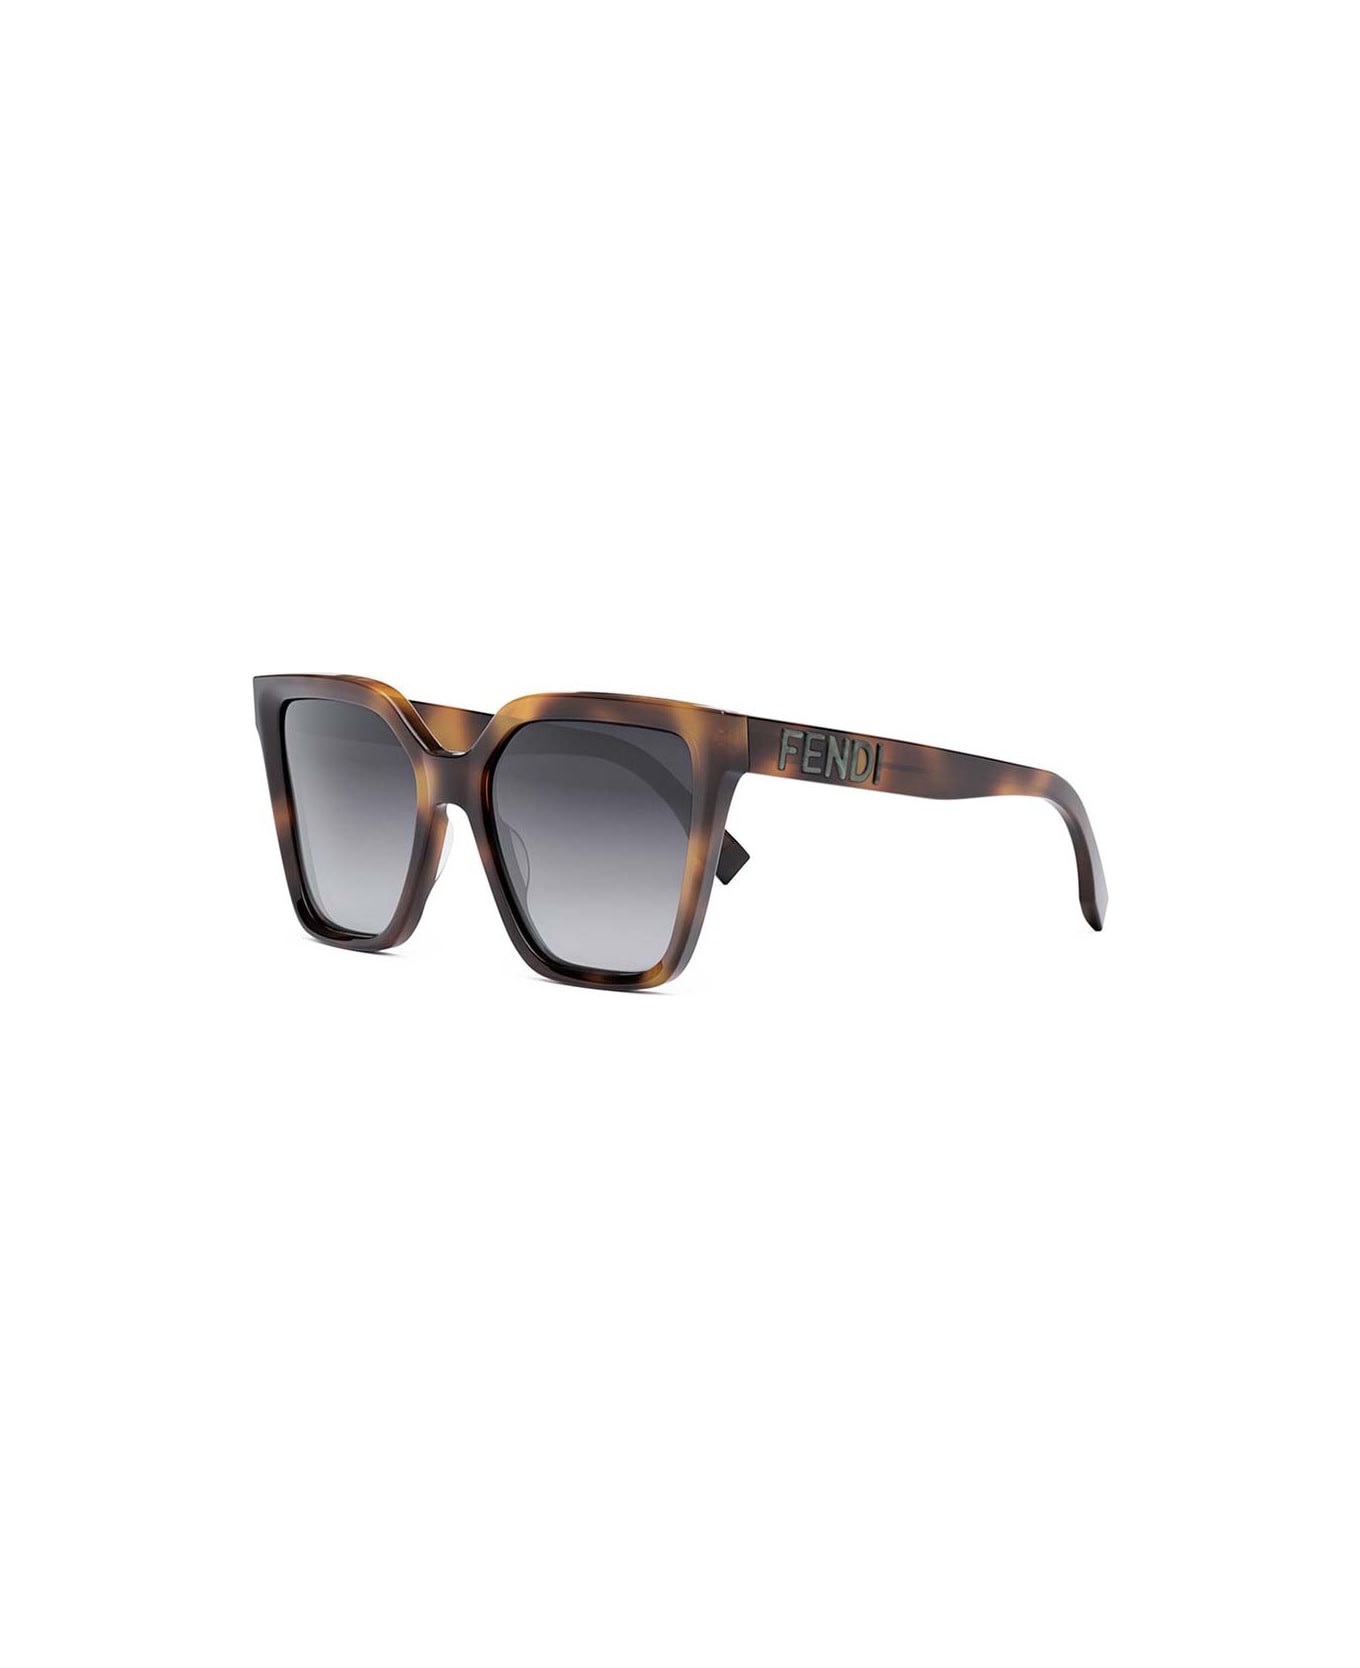 Fendi Eyewear Sunglasses - Marrone/Grigio